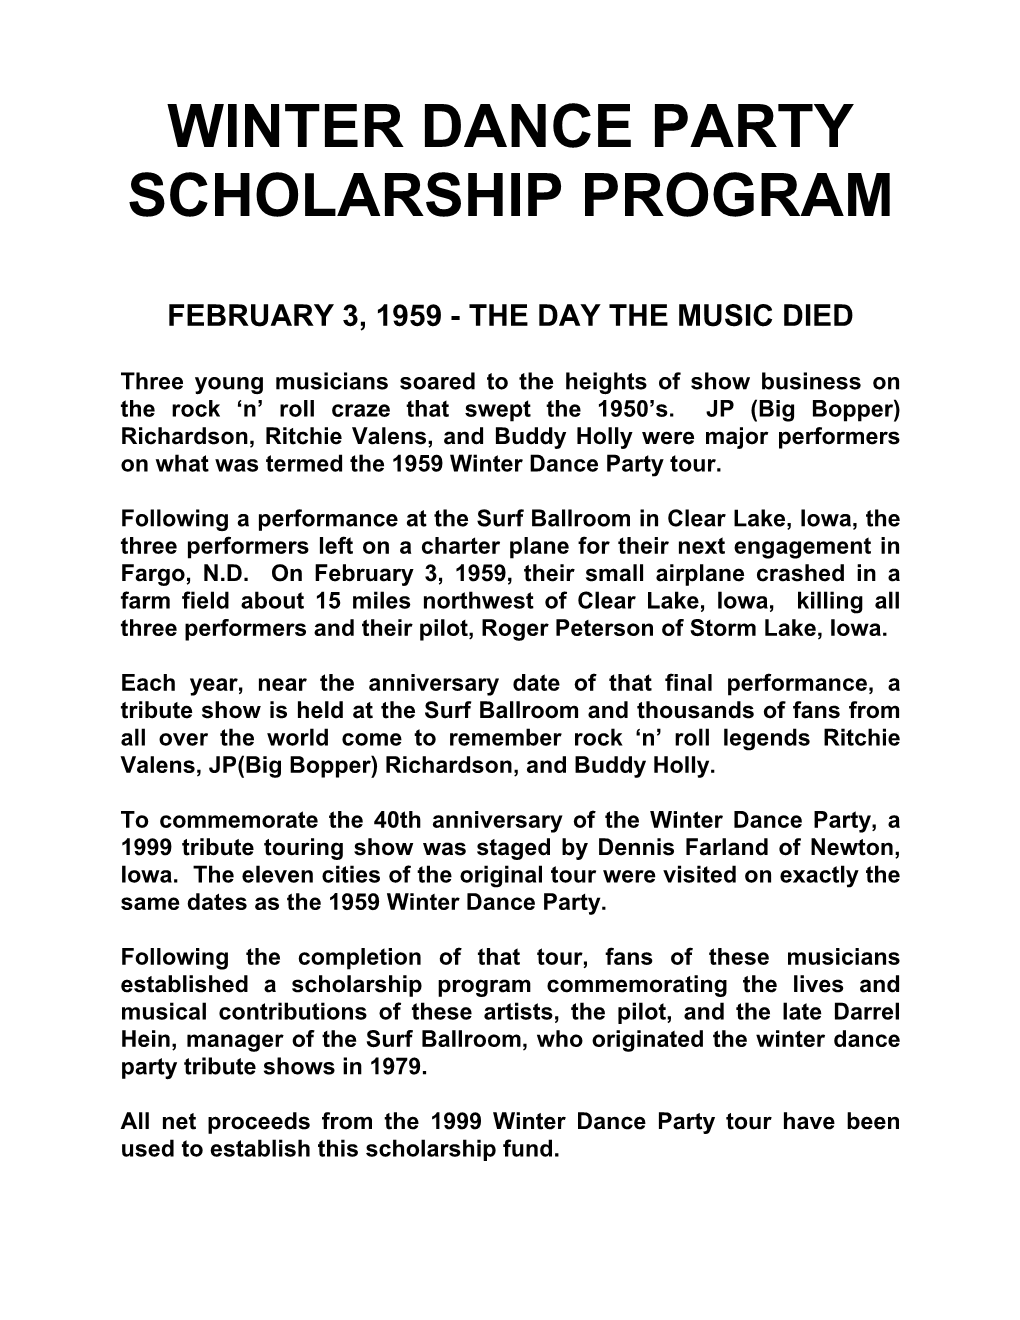 Winter Dance Party Scholarship Program